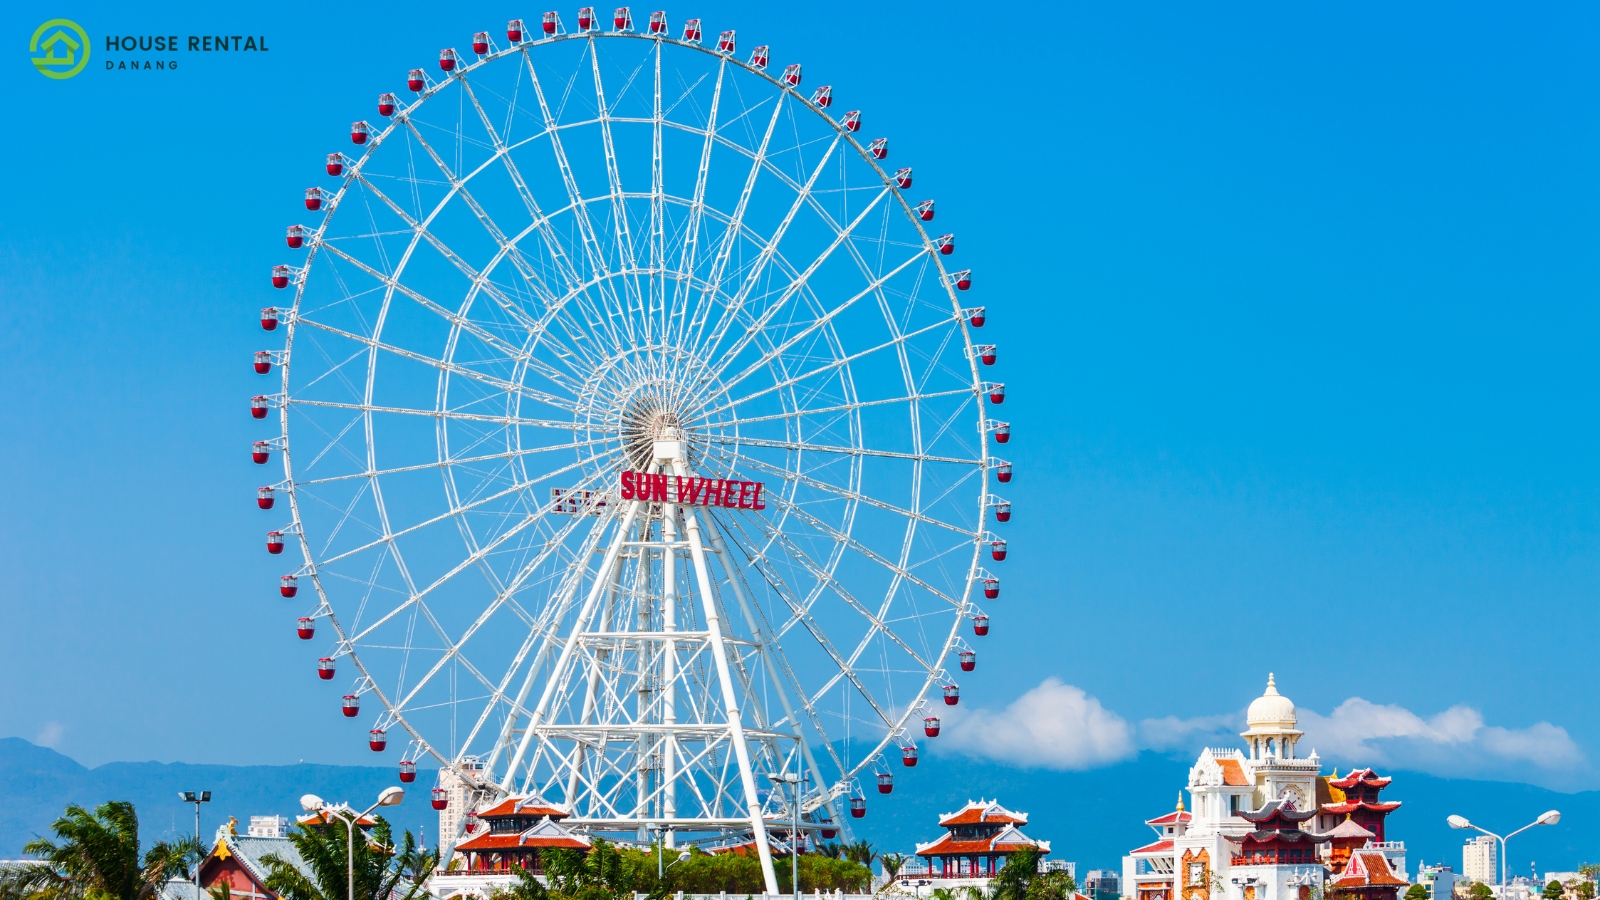 An amusement park with a large ferris wheel in Da Nang.